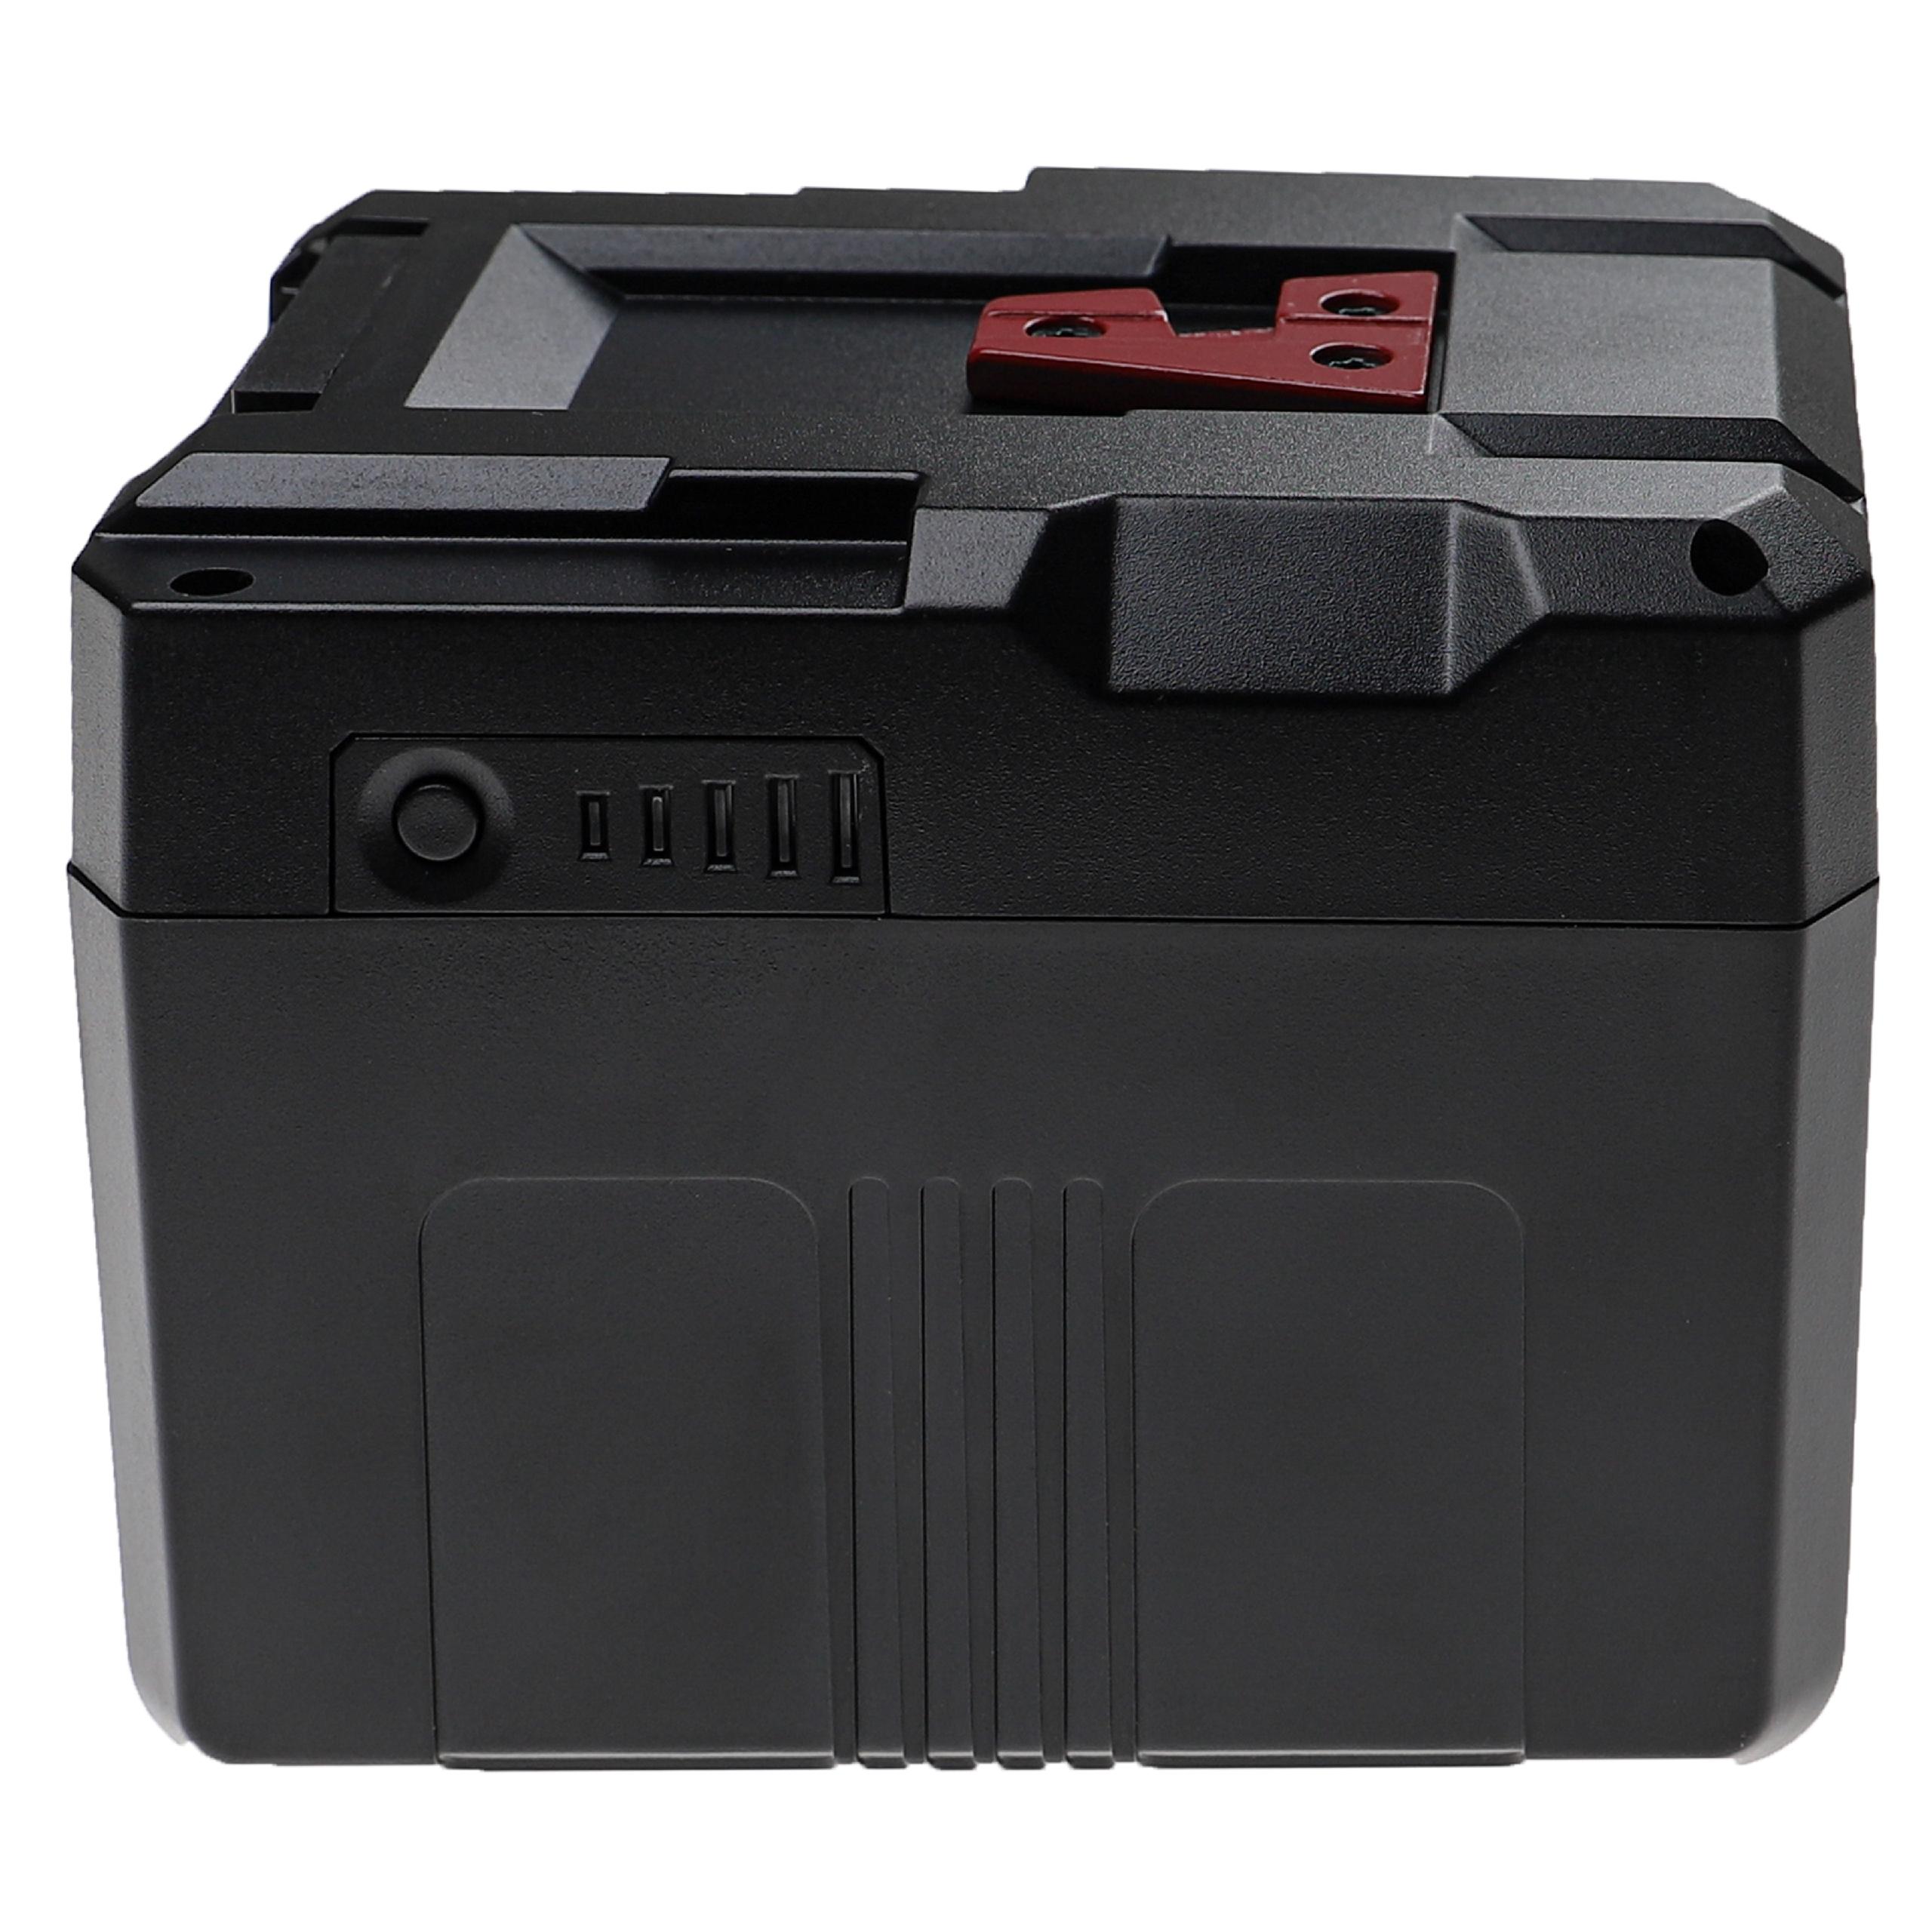 Videocamera Battery Replacement for Sony BP-150w, BP-150WS, BP-190S, BP-190WS, BP-230W - 15600mAh 14.8V Li-Ion